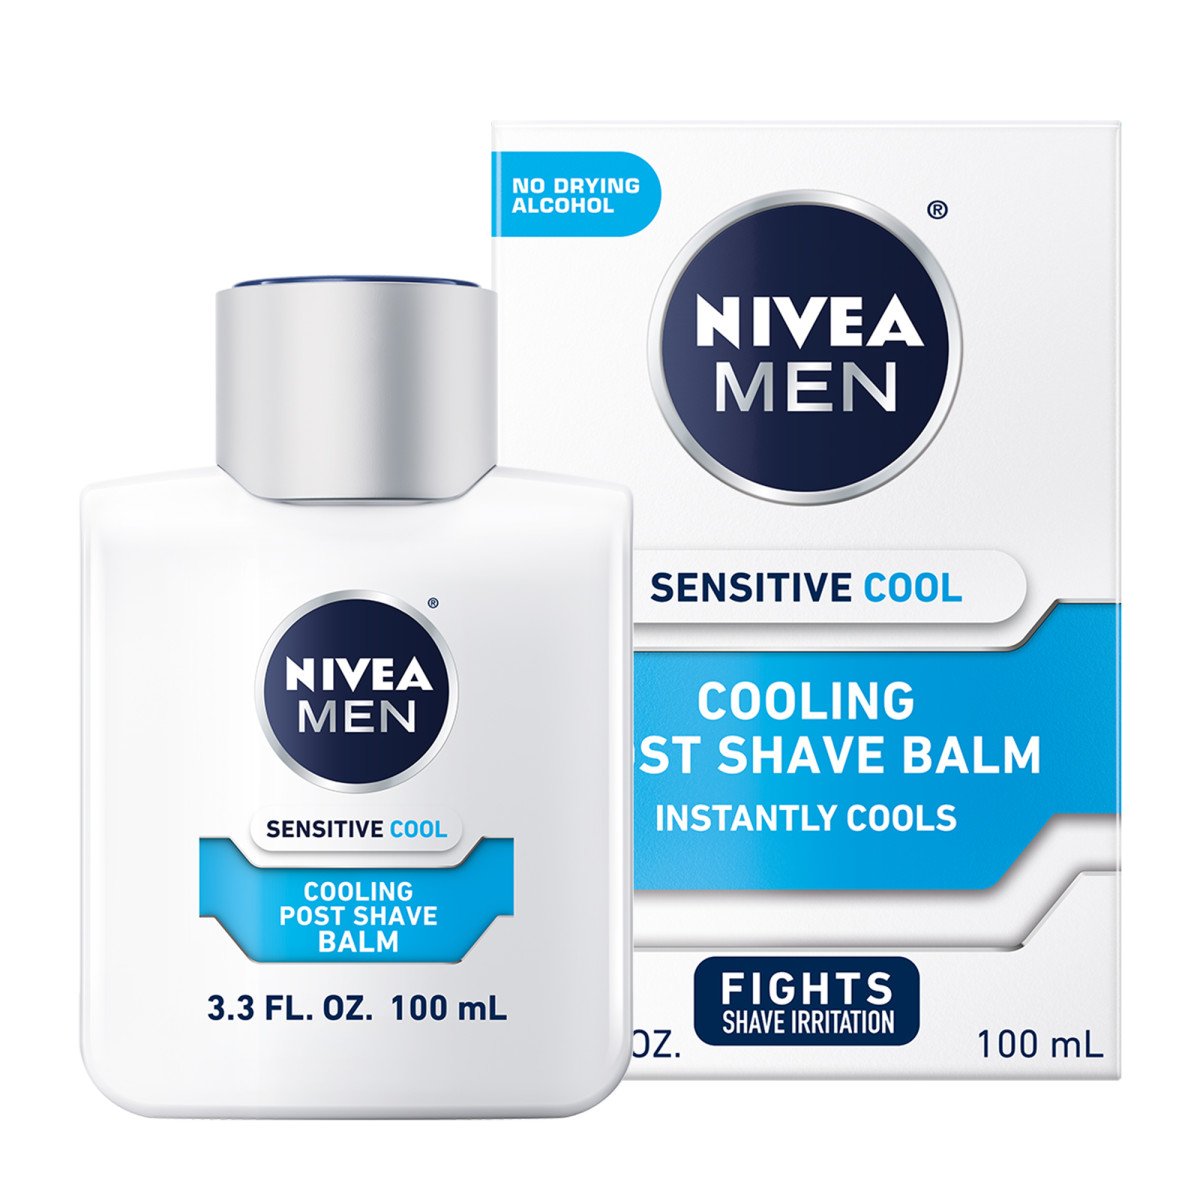 NIVEA Men Sensitive Cooling Post Shave Balm Shop Bath & Skin Care at H-E-B